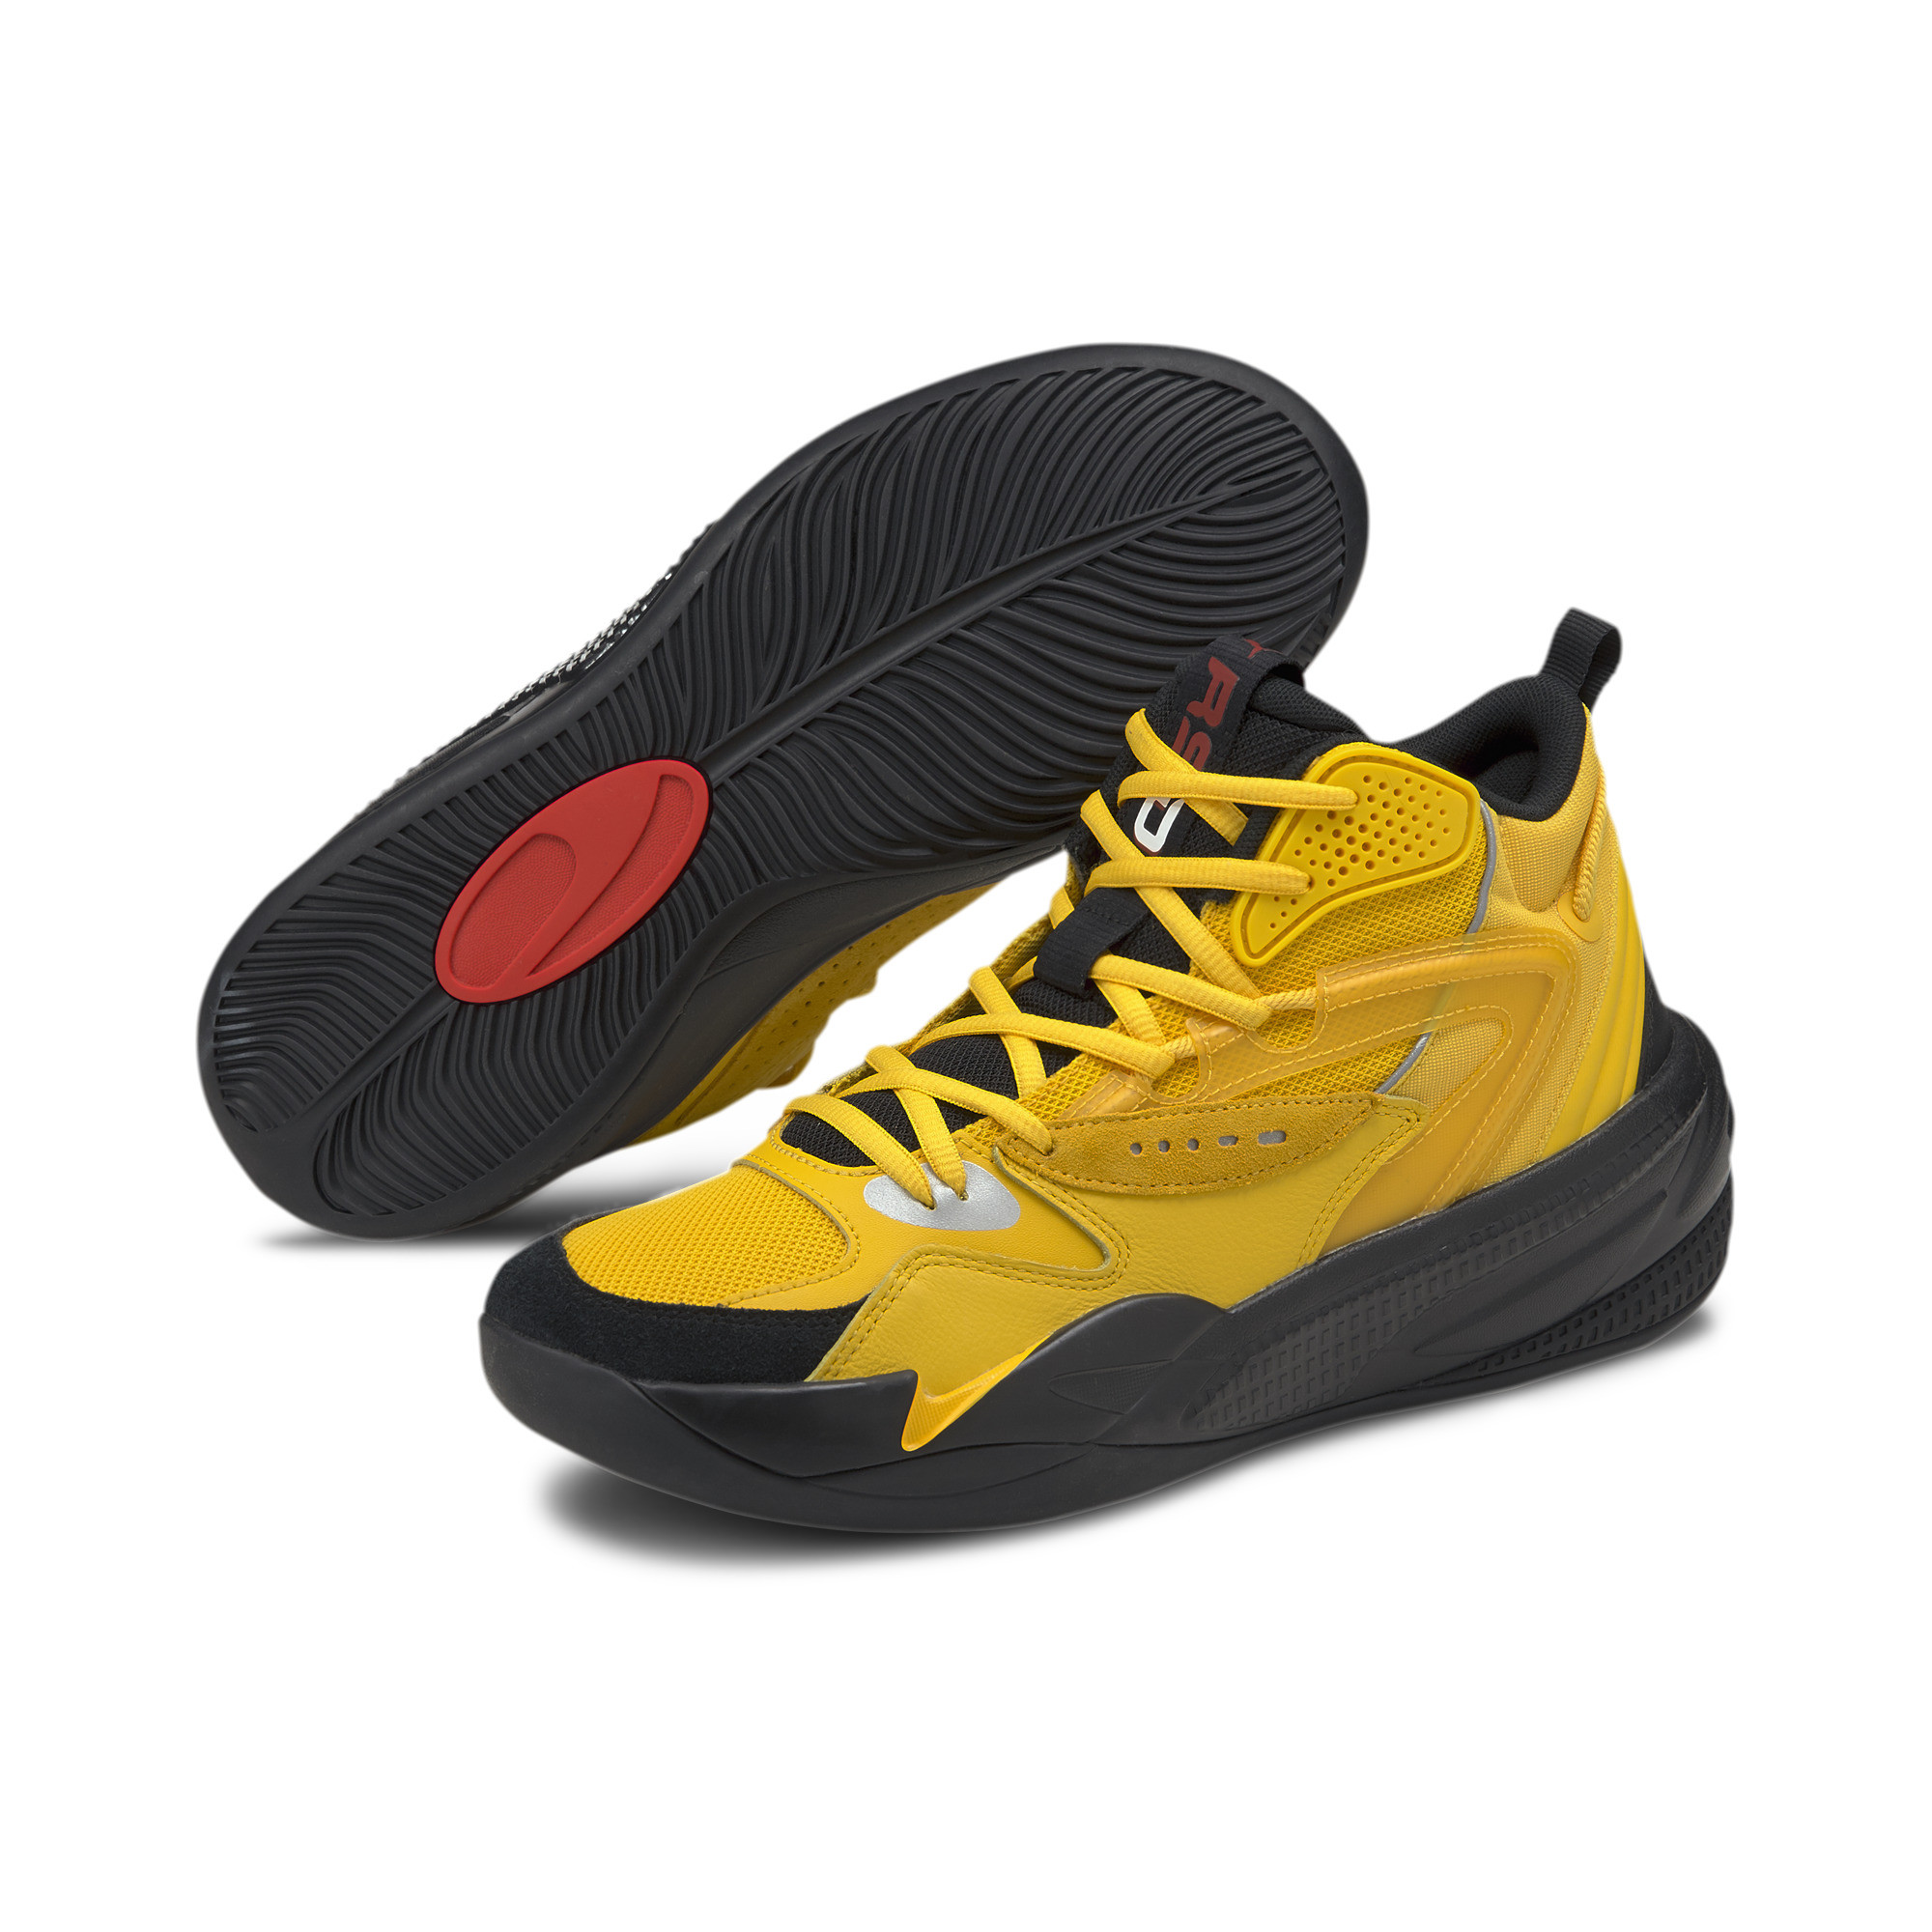 J. Cole Announces His 2nd Signature Basketball Sneaker, The PUMA DREAMER 2